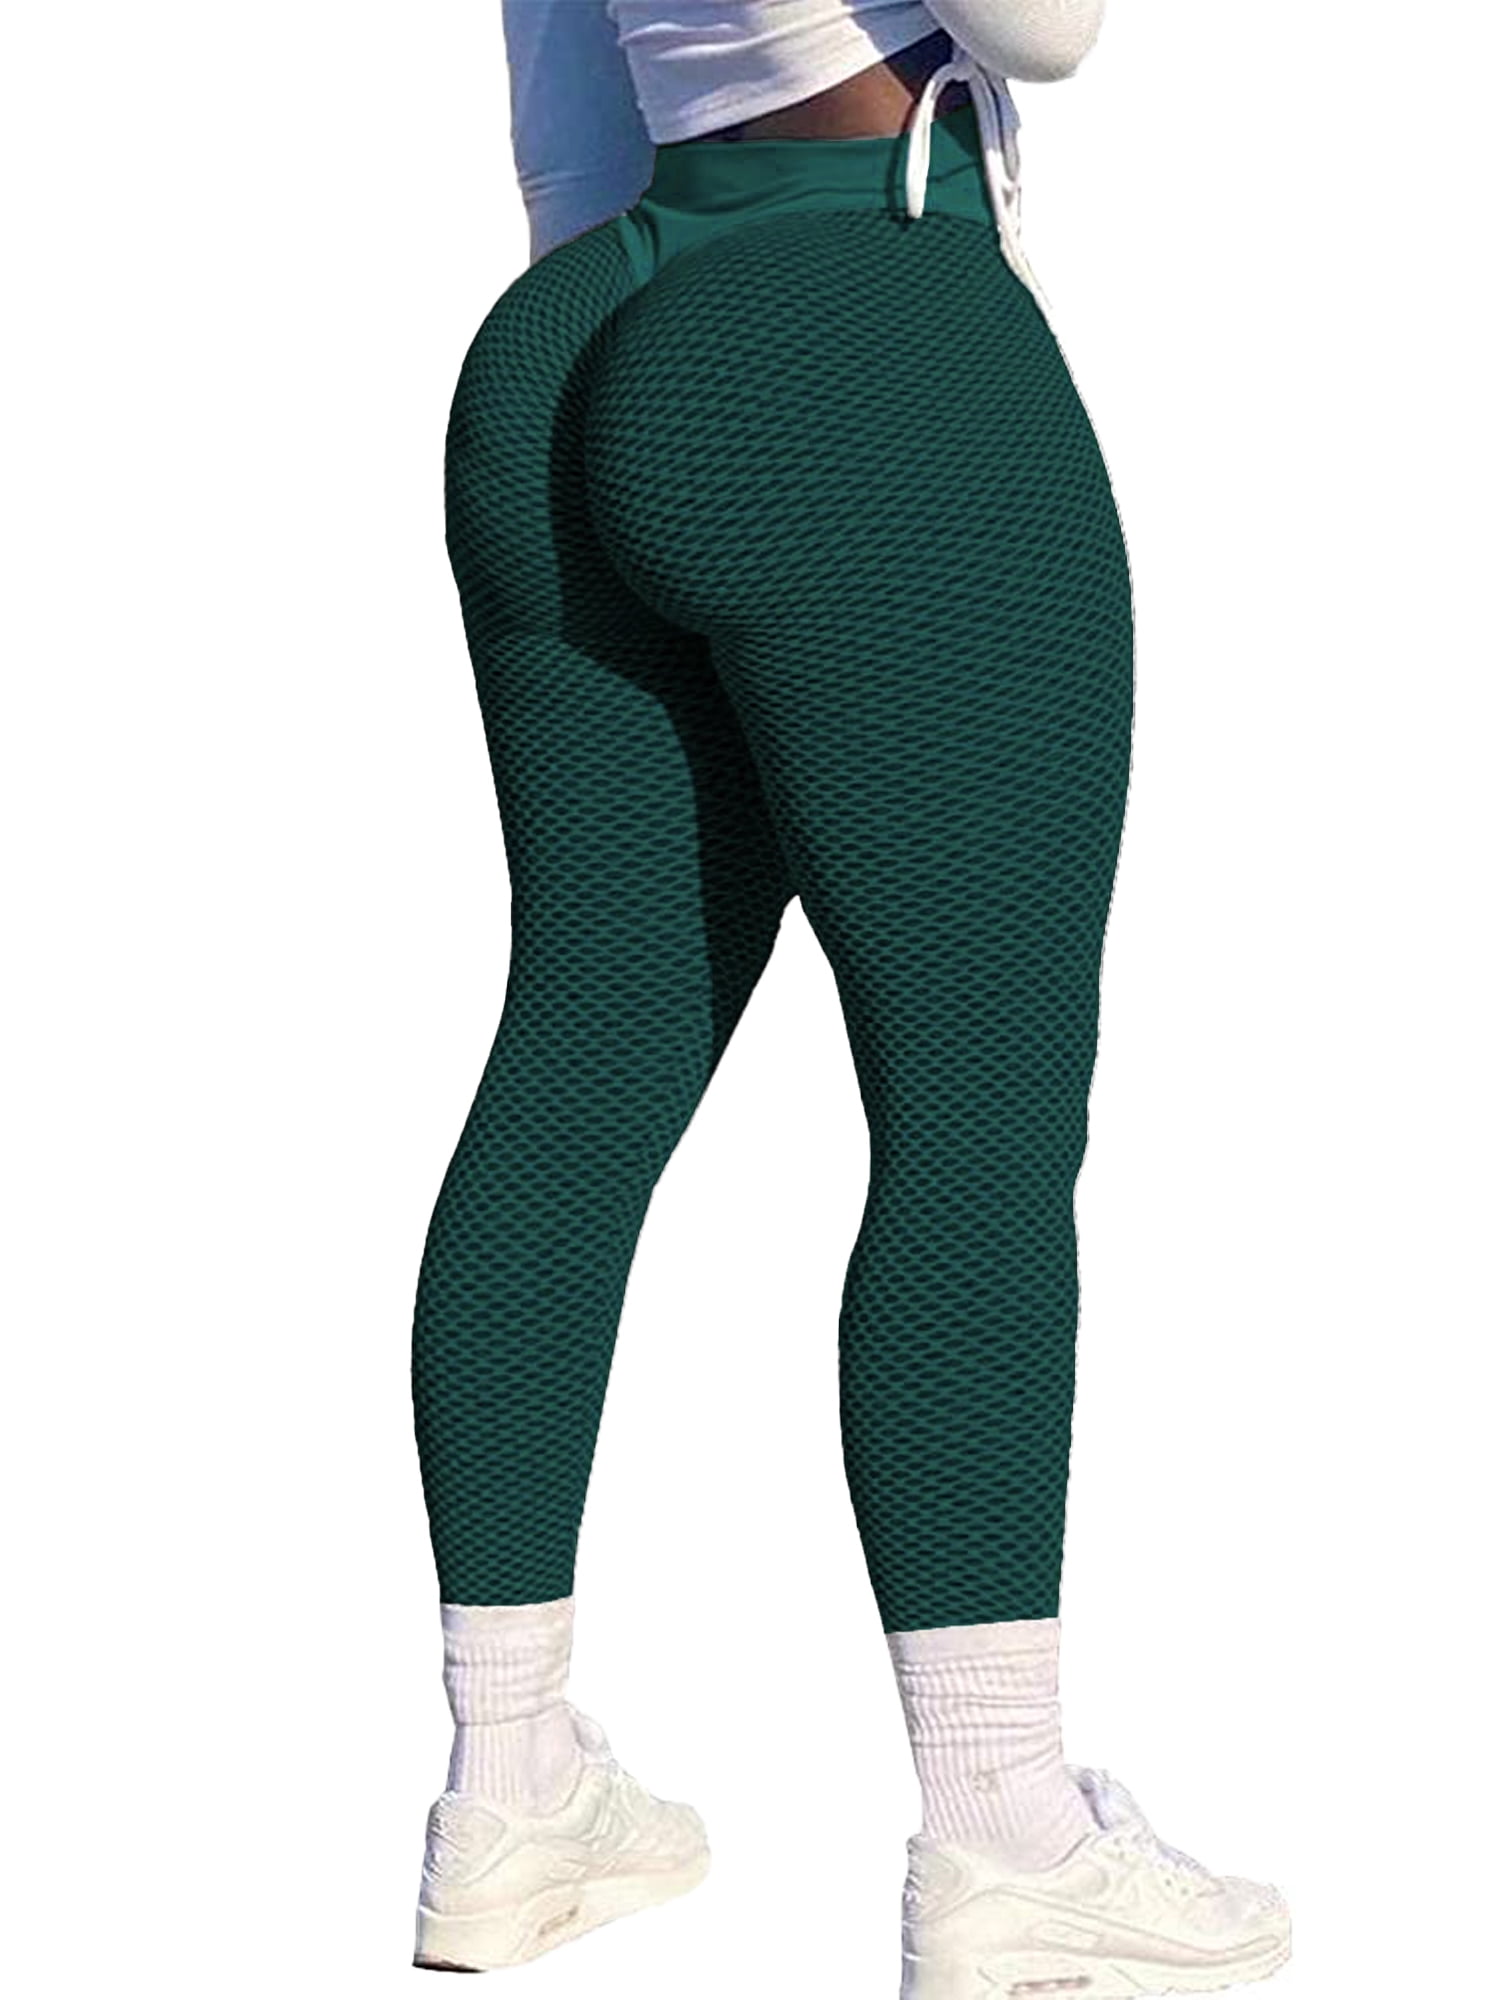 QRIC Yoga Pants for Women Scrunch Butt Lifting Workout Leggings